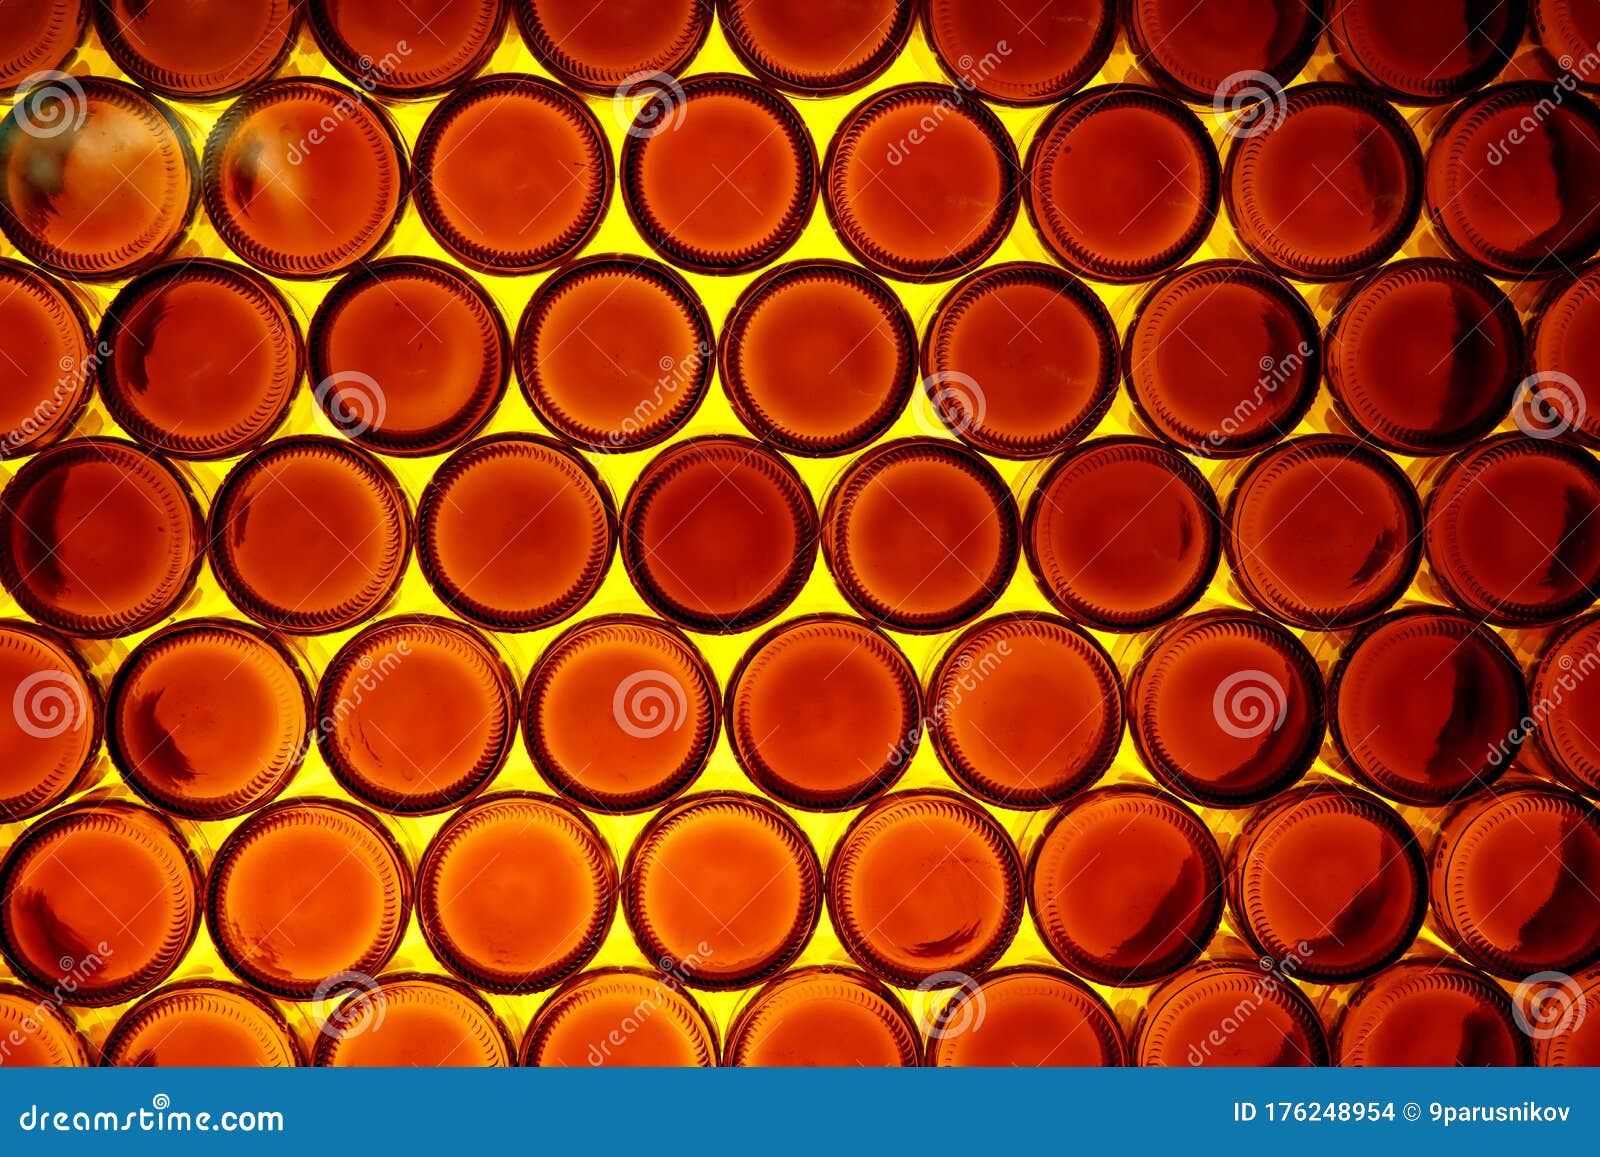 background of bottoms of orange bottles